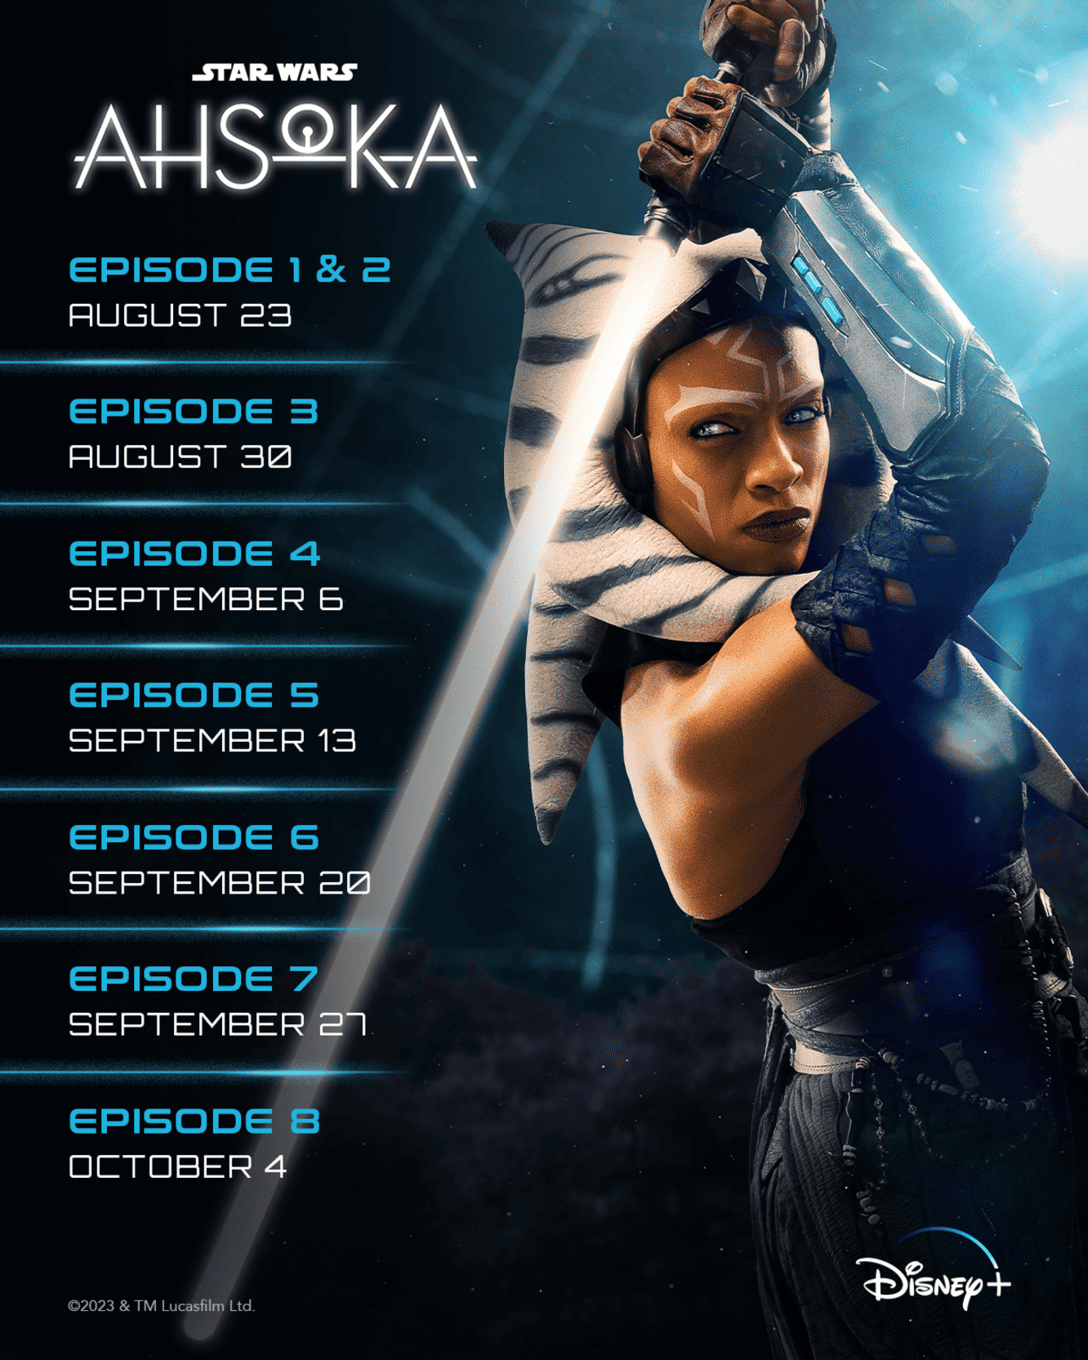 Star Wars Ahsoka Season 1 Episode Guide Checklist